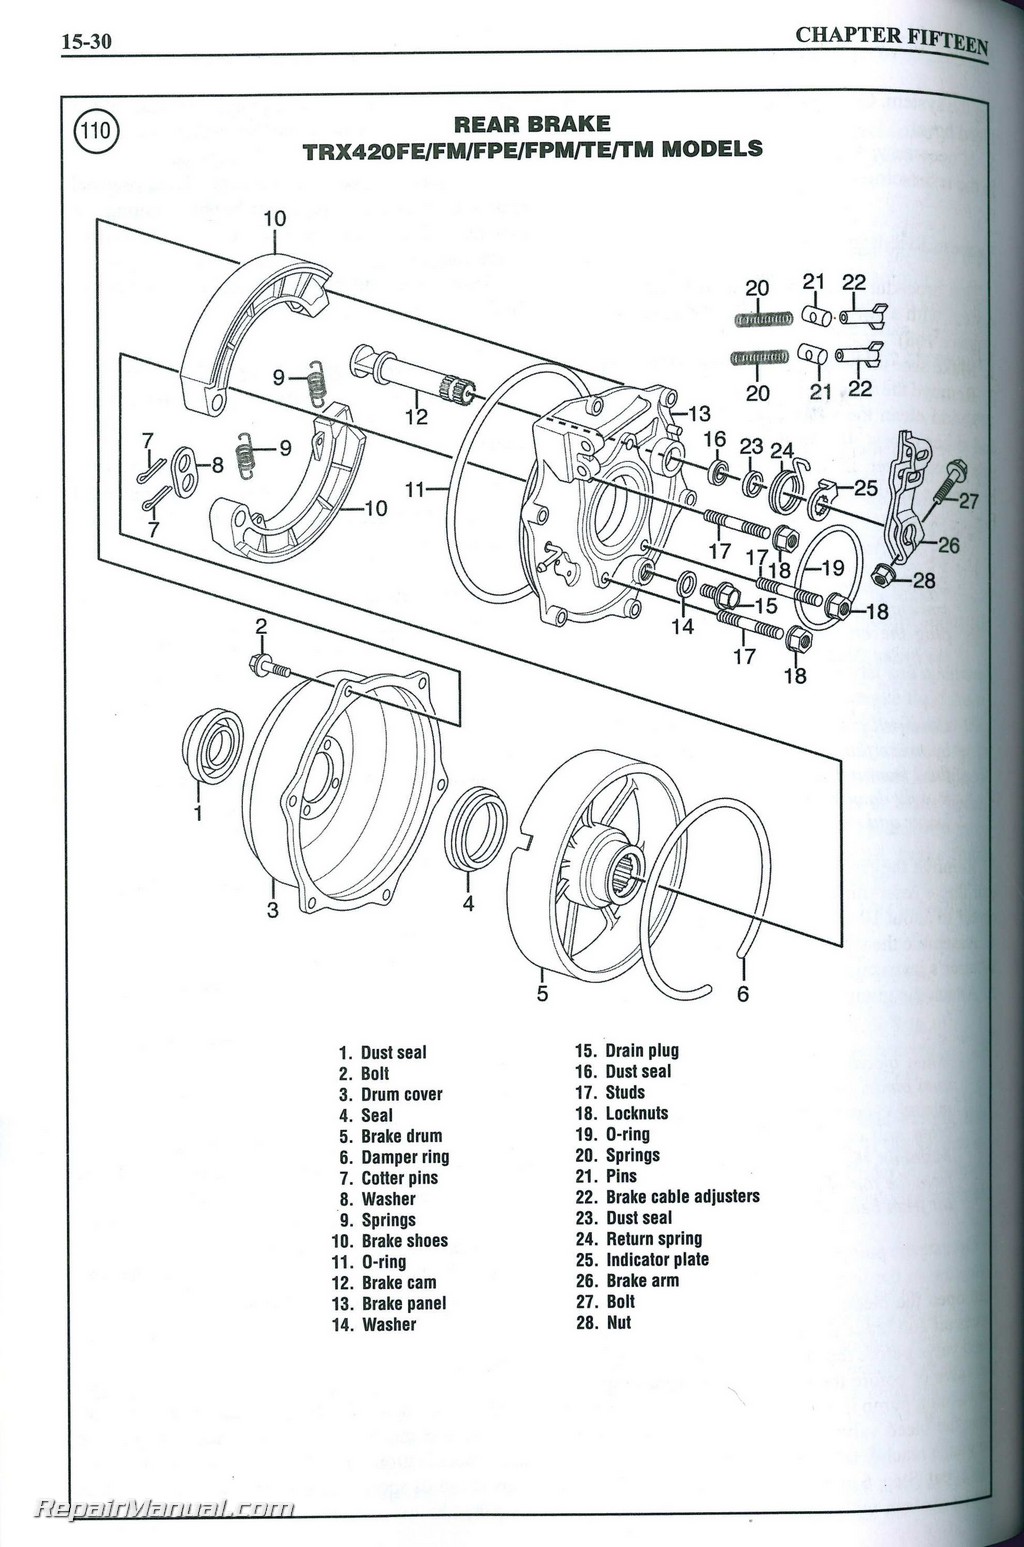 2002 Honda rancher service manual pdf #2